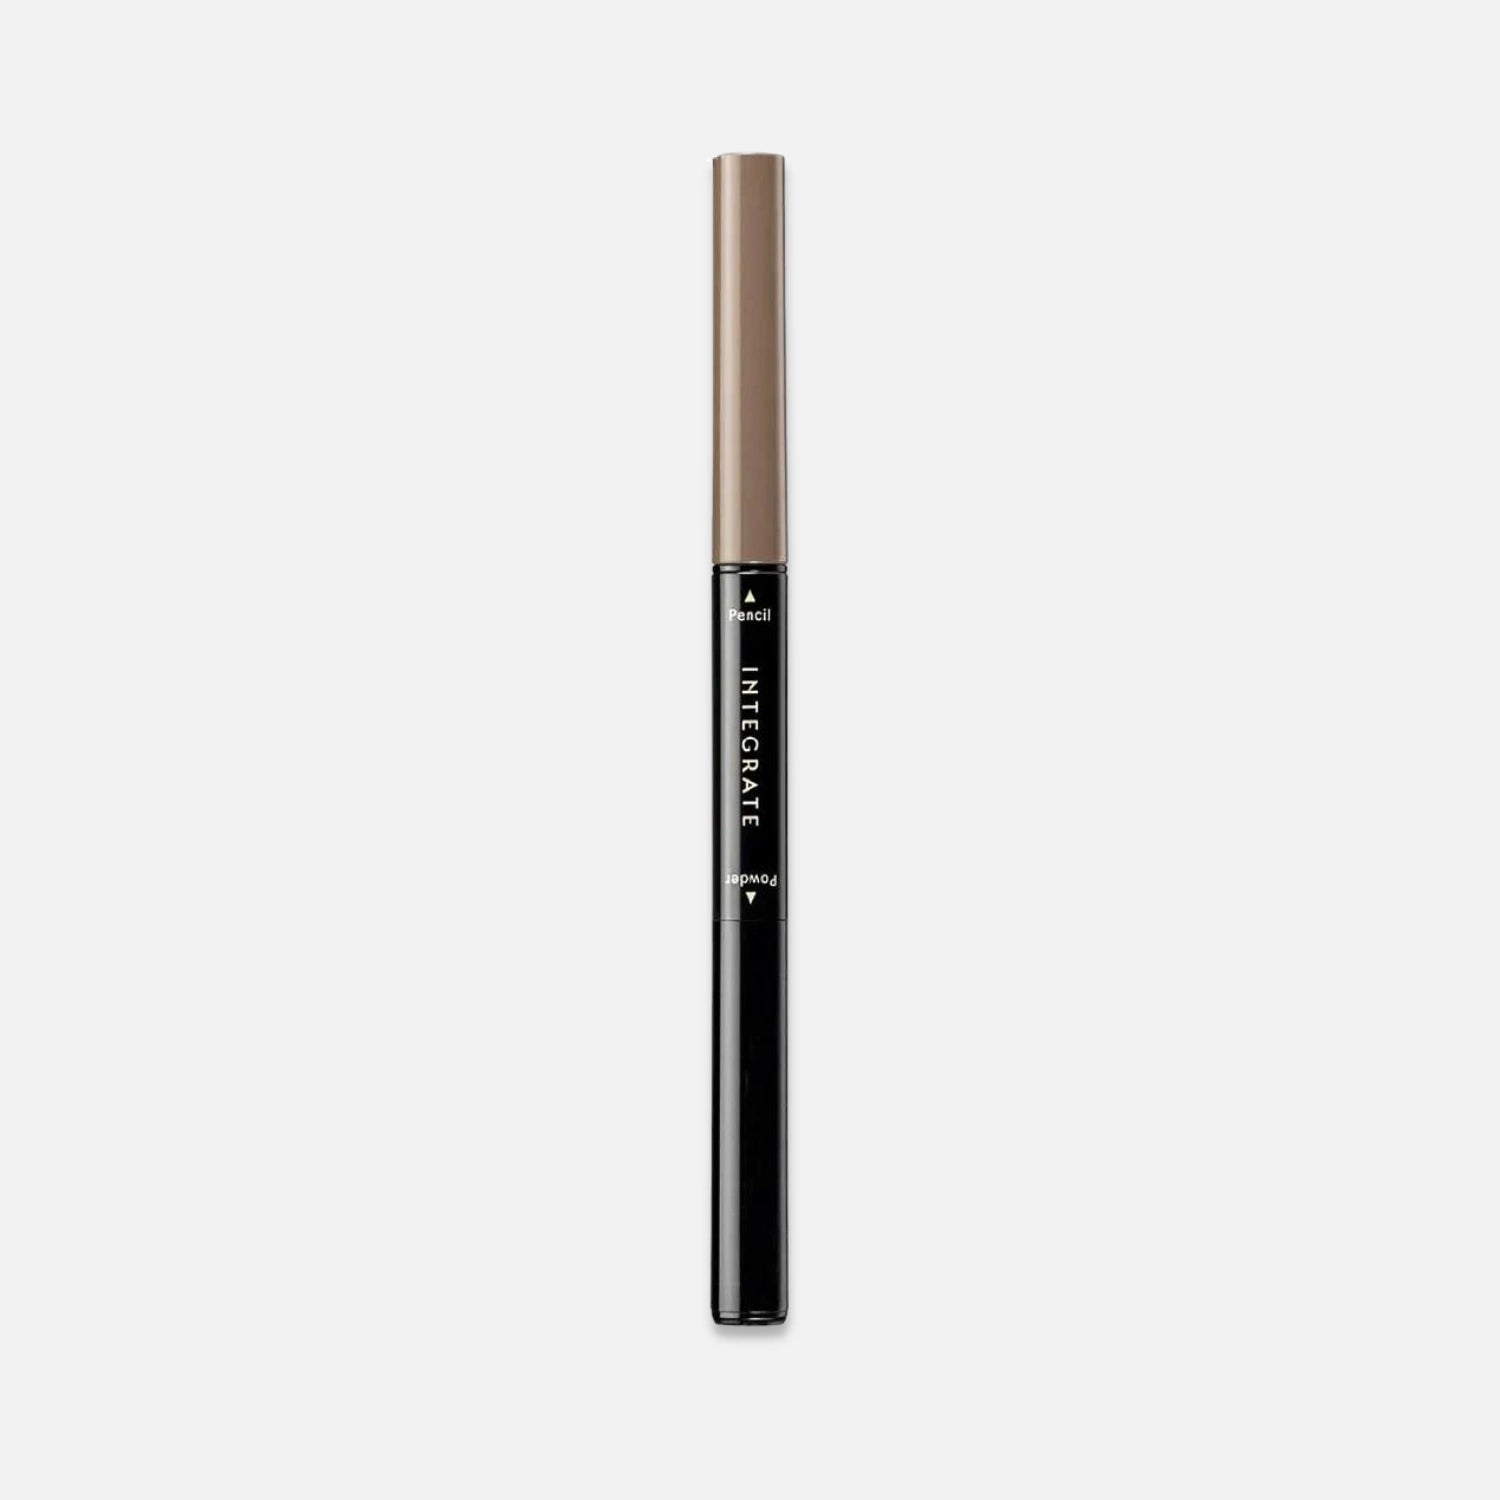 Shiseido Integrate Natural Stay Waterproof Double Eyebrow Pencil (Various Shades) - Buy Me Japan